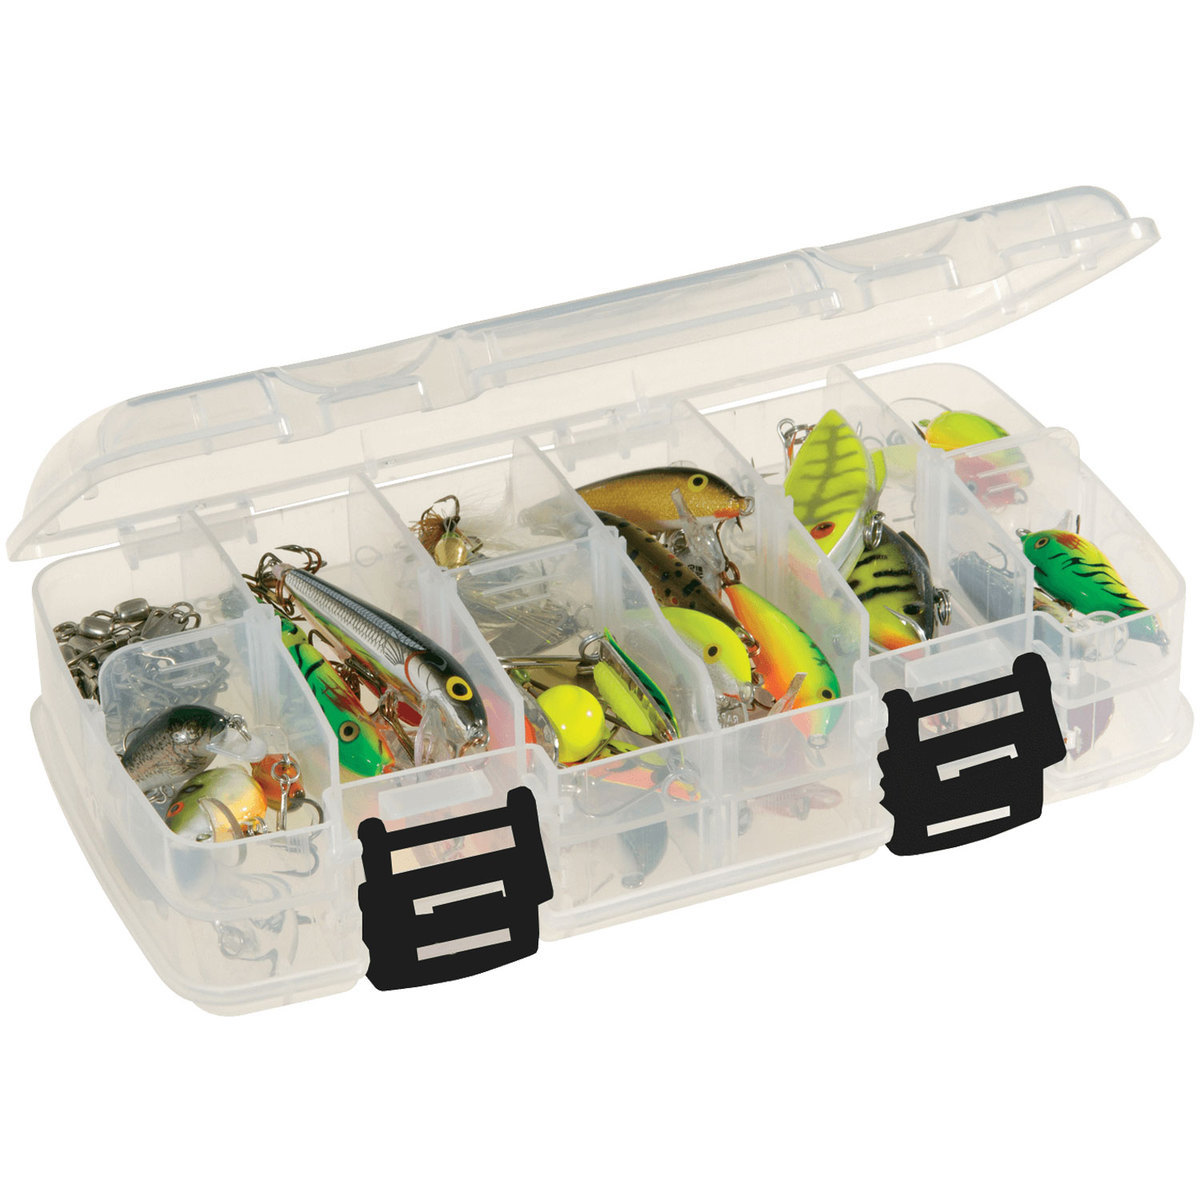 Fishing Lure Box, Double Sided Plastic Fishing Bait Box Versatile for Hooks